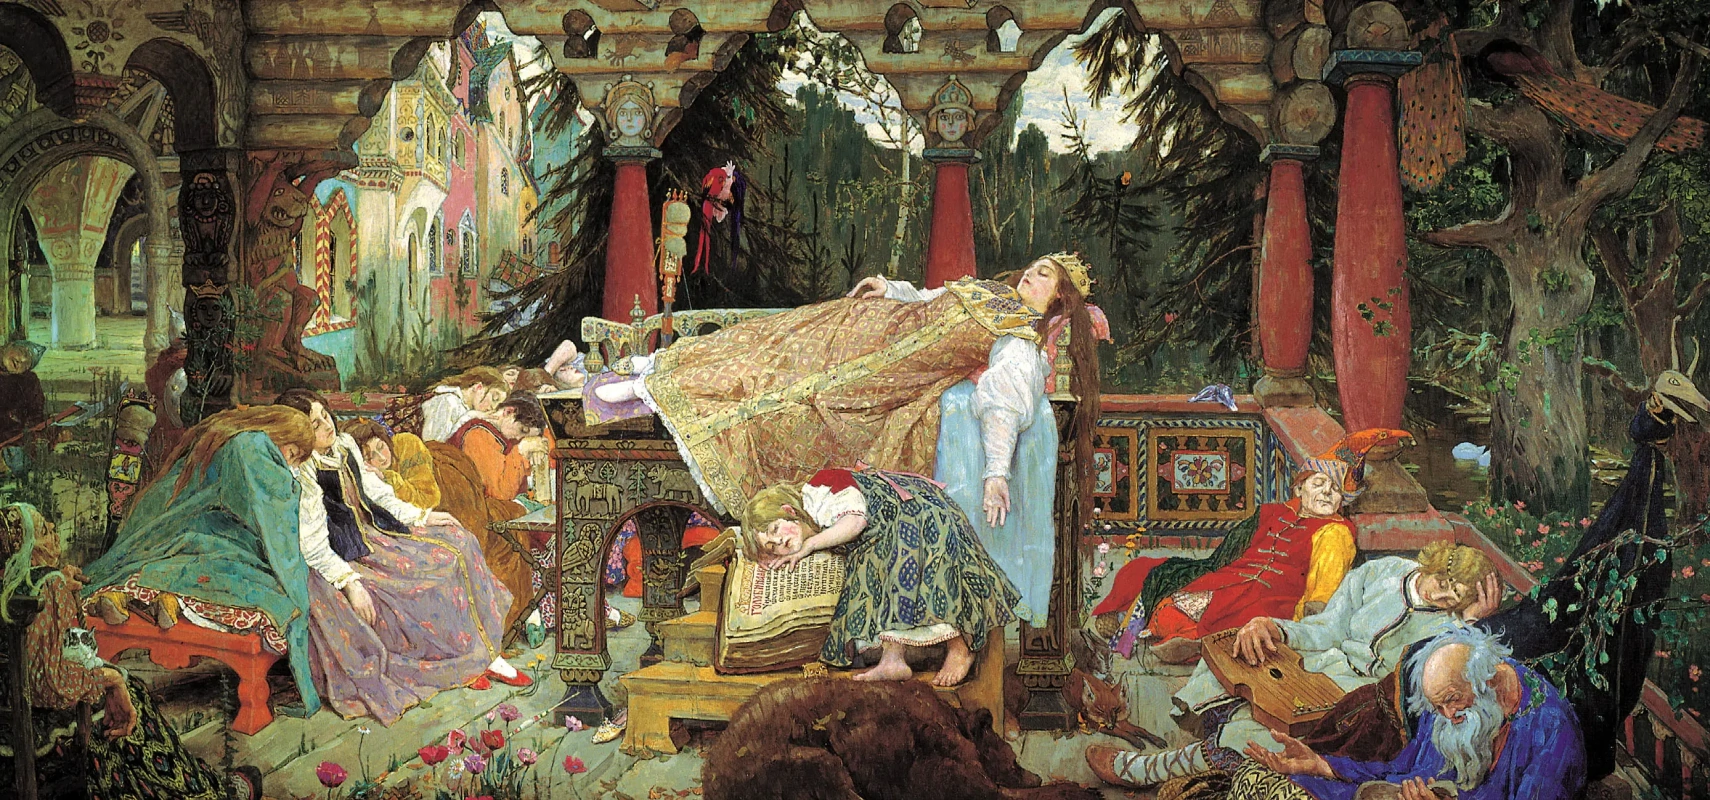 Enchanting World of the Russian Tale: Viktor Vasnetsov, The Sleeping Tsarevna, 1926, Tretyakov Gallery, Moscow, Russia.